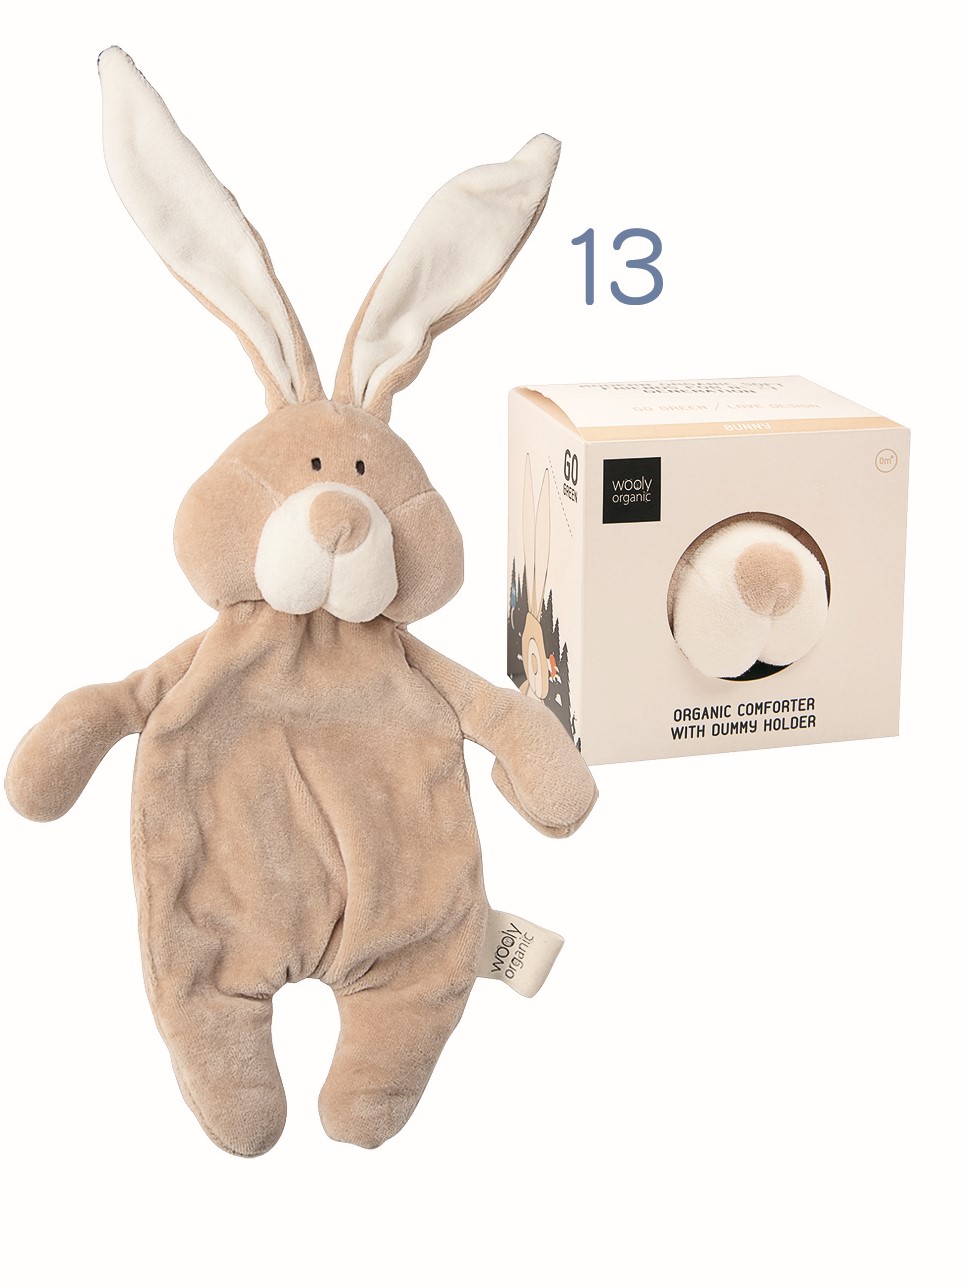 13. Wooly Organic Organic Comforter With Dummy Holder - Bunny 售價： $329 總評： 4星